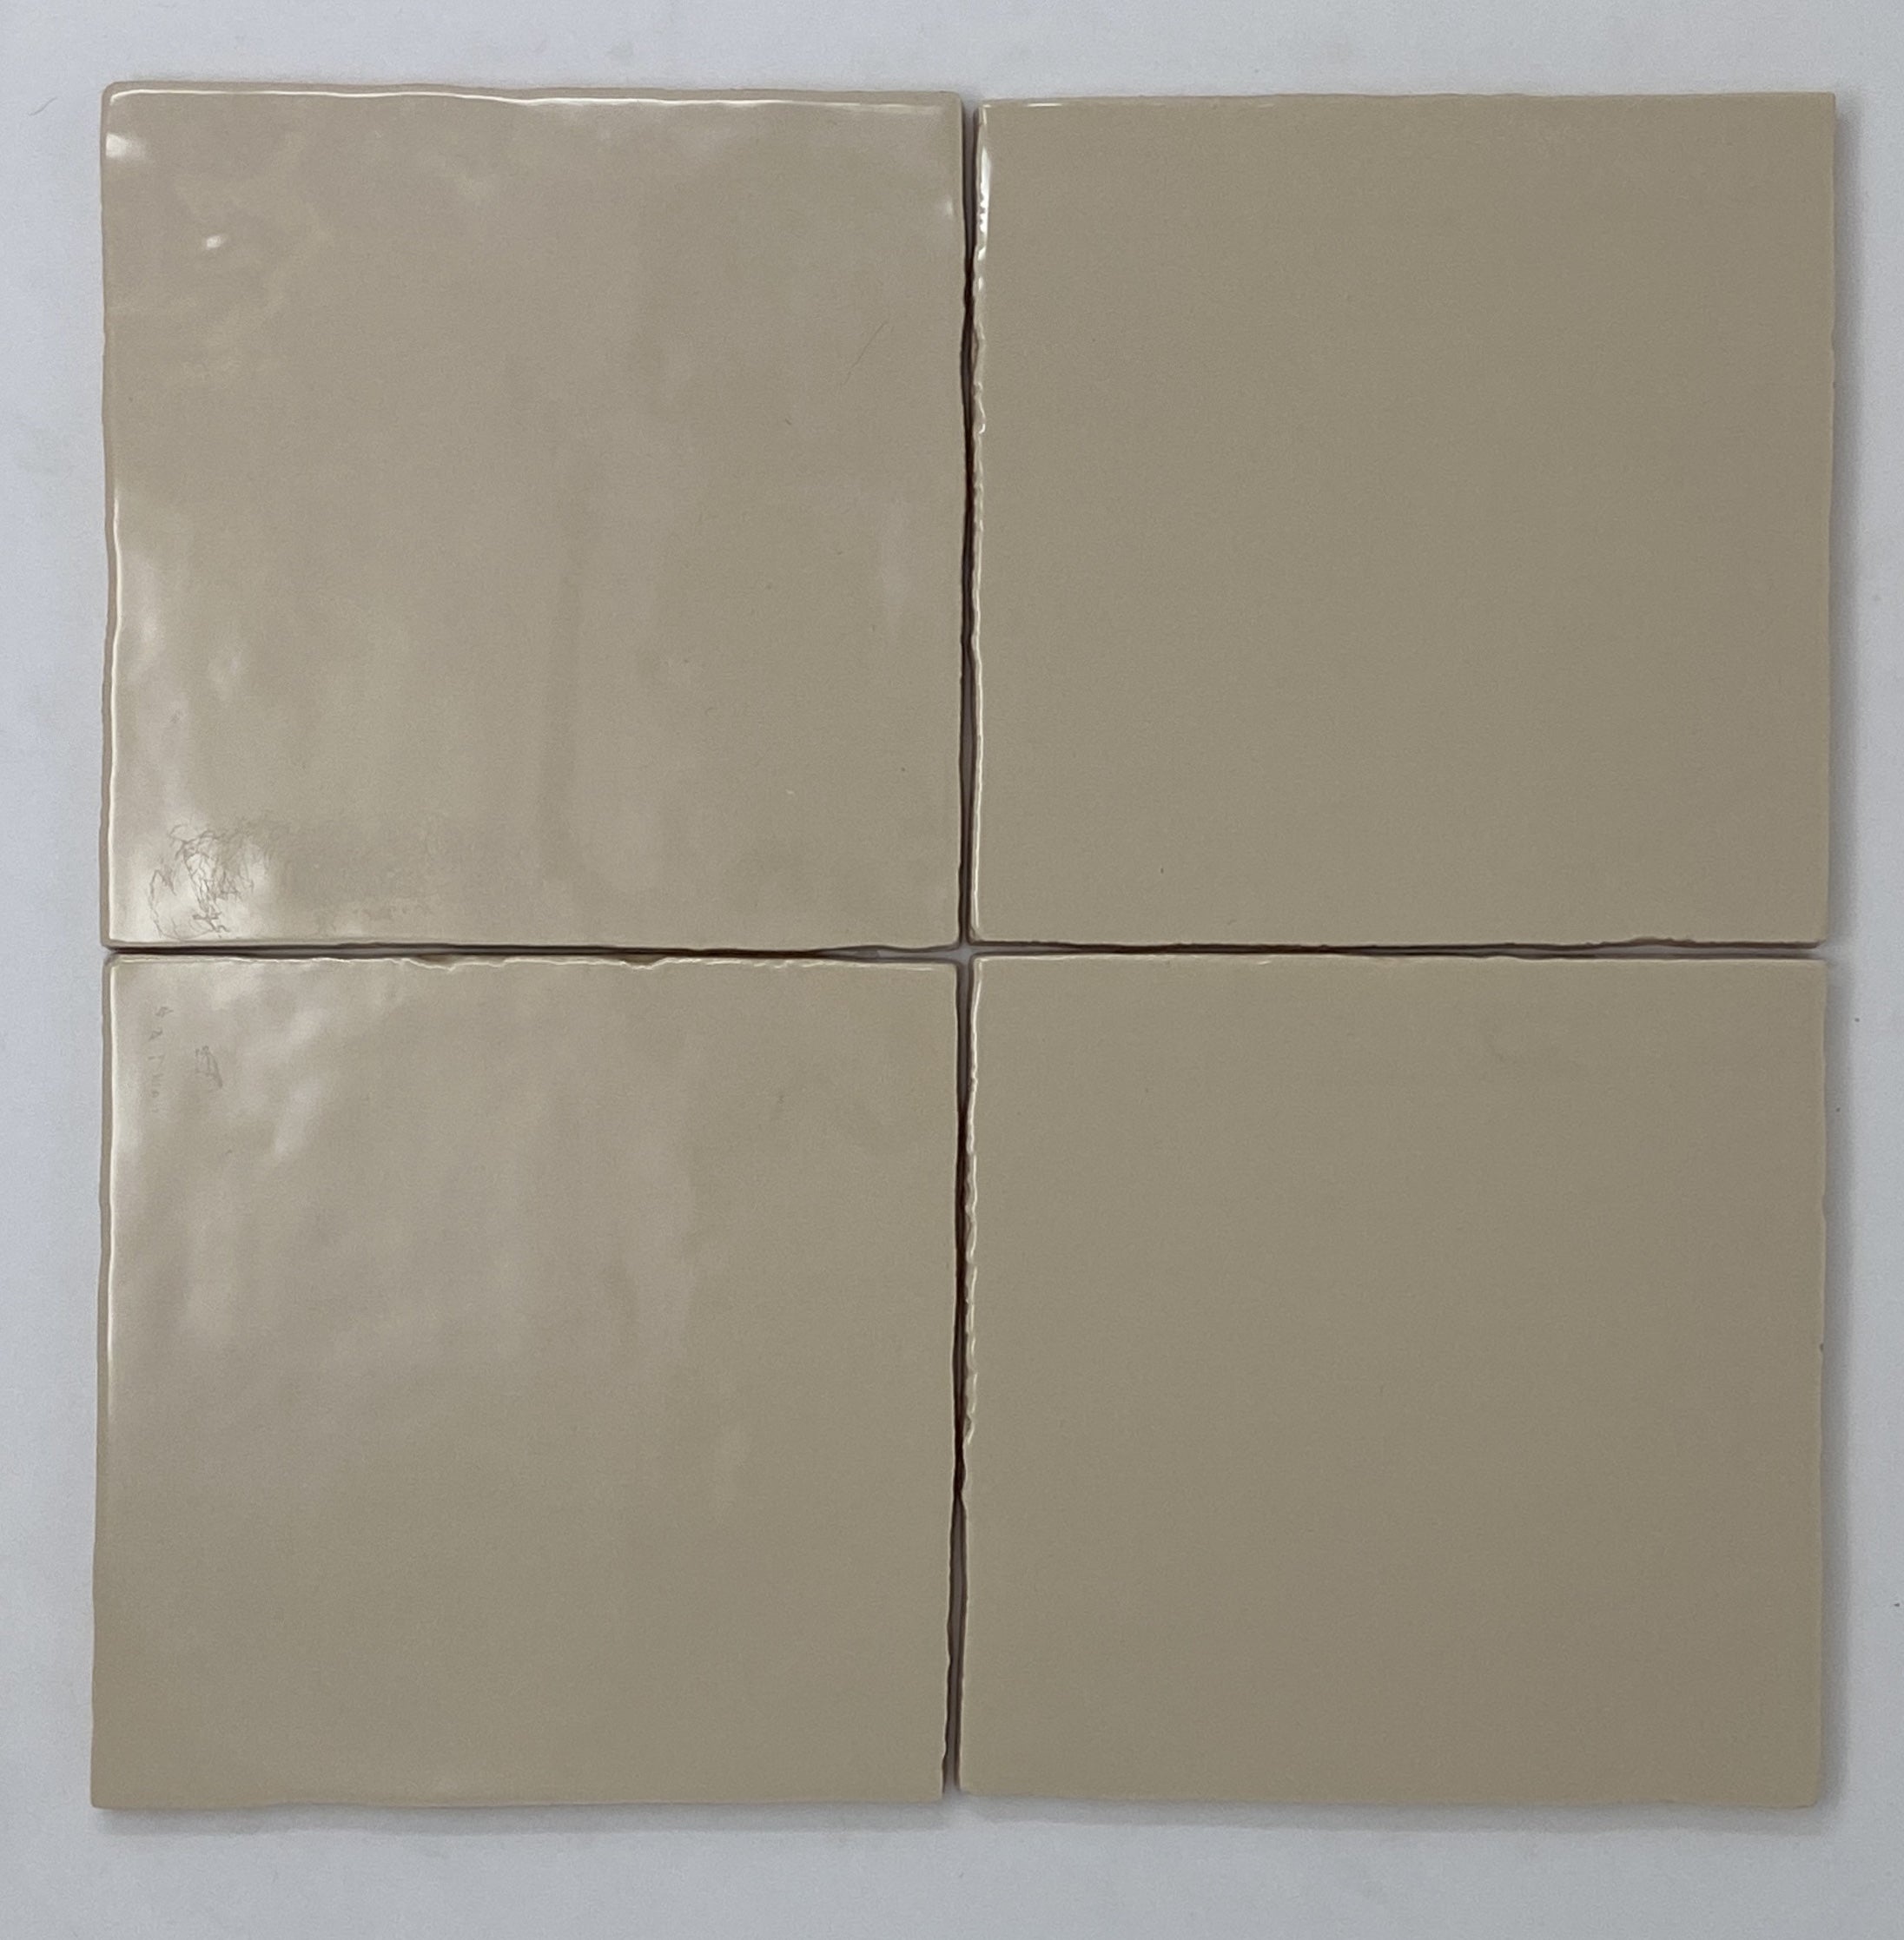 6x6 Cream Handmade Look Subway Ceramic Wall Tile for Bathroom Shower, Kitchen Backsplashes, Fireplace